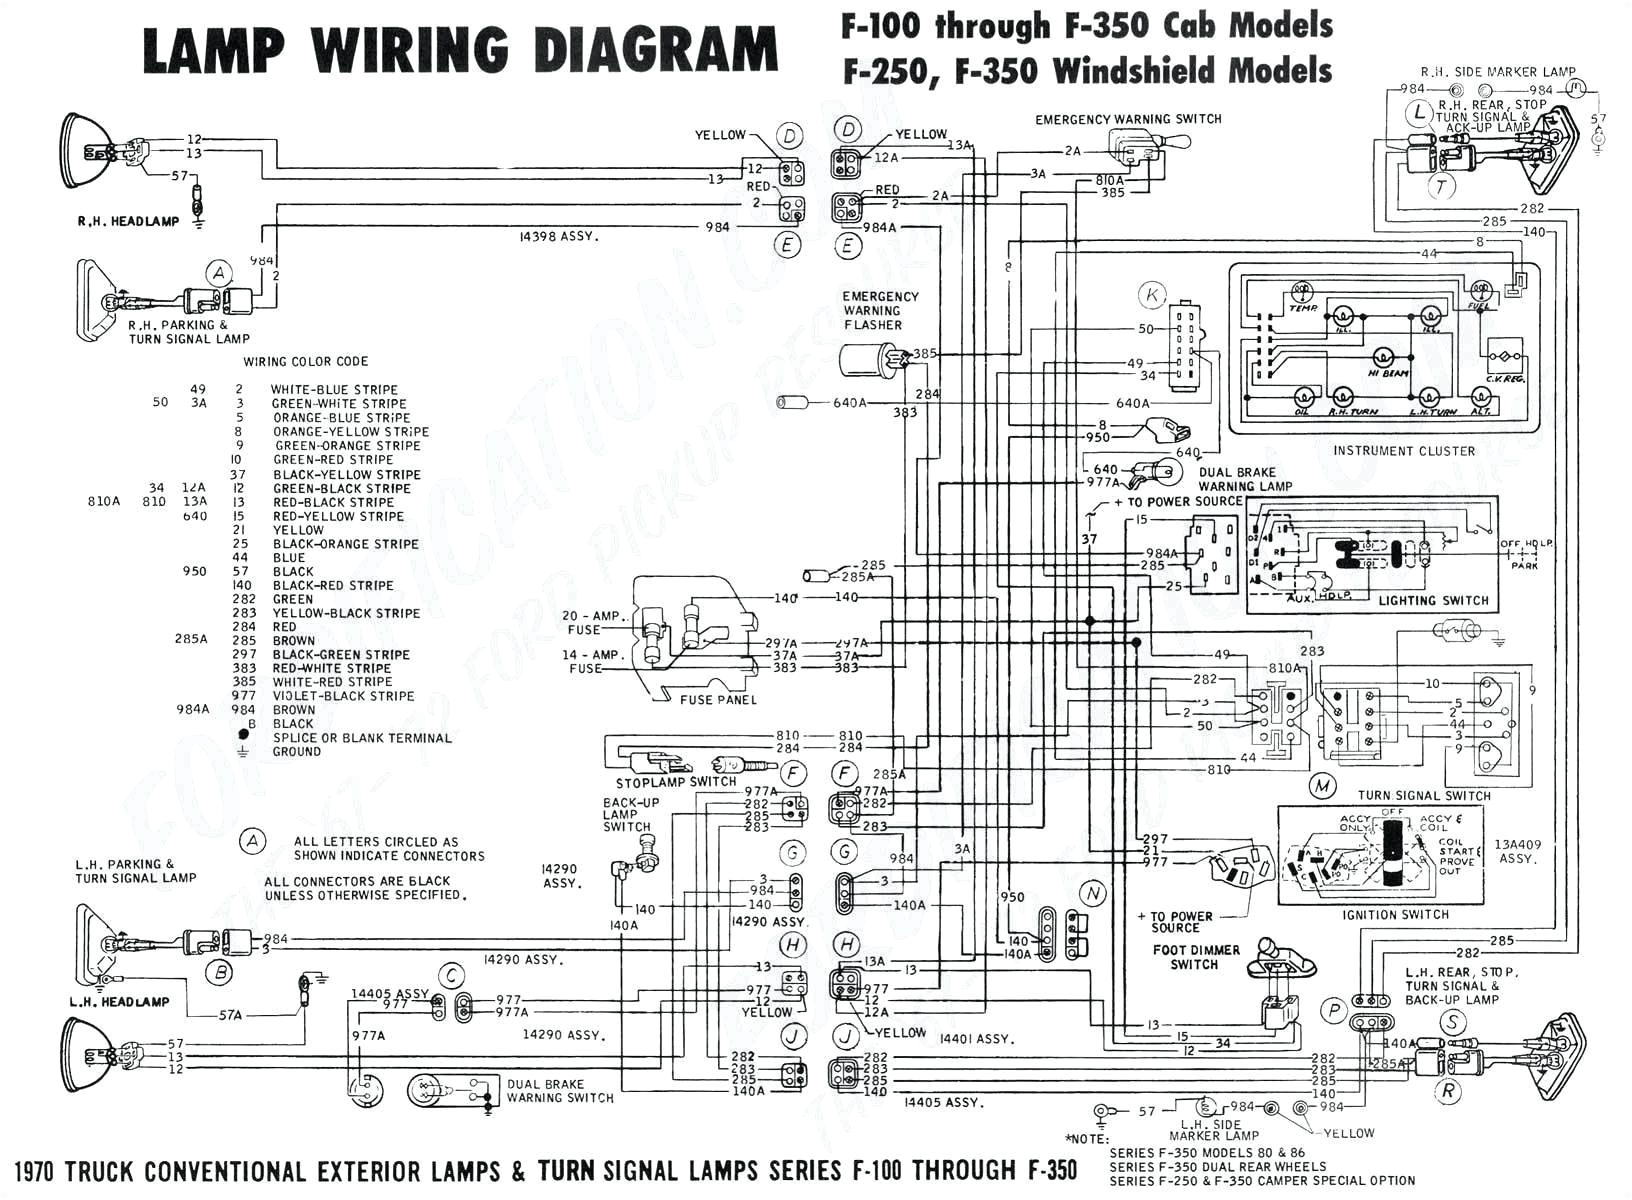 1989 chrysler lebaron power steering diagram wiring wiring diagram wiring diagram 1985 plymouth 4 door